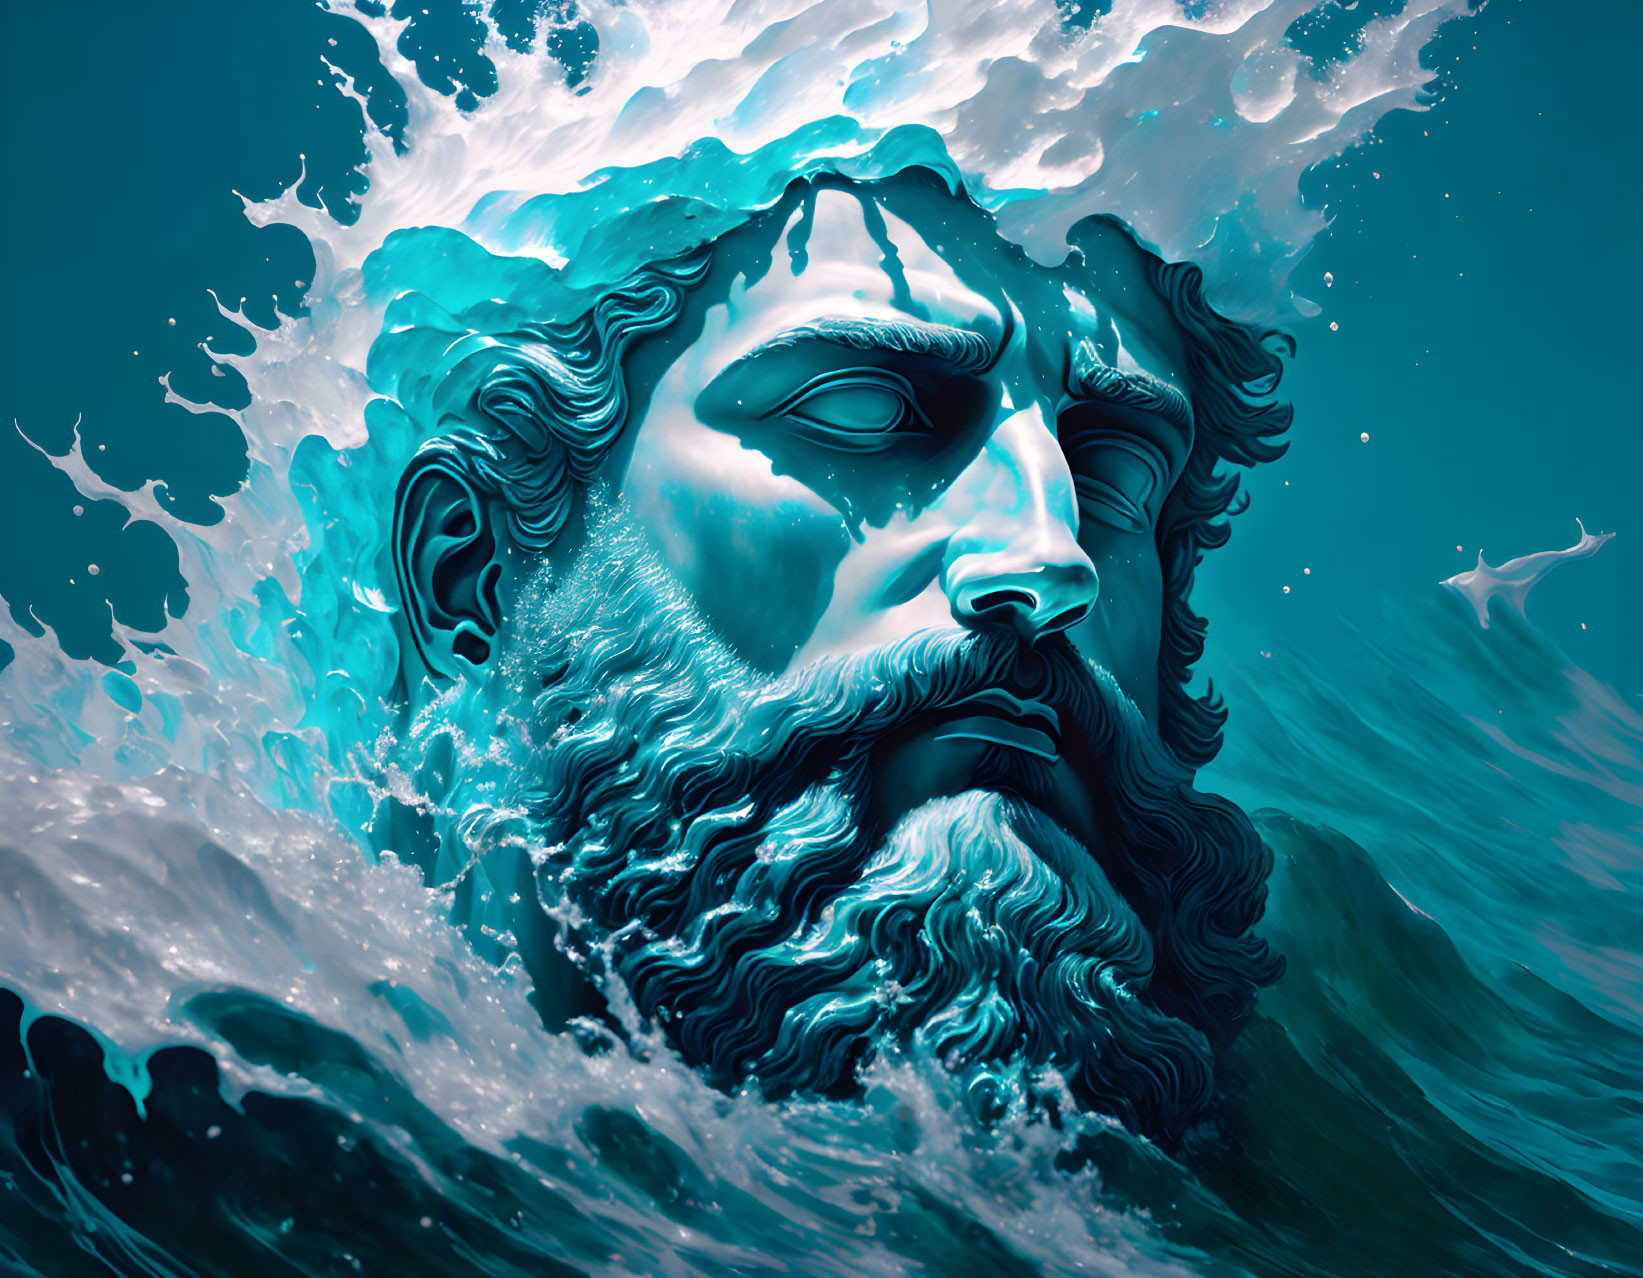 Poseidon Rising